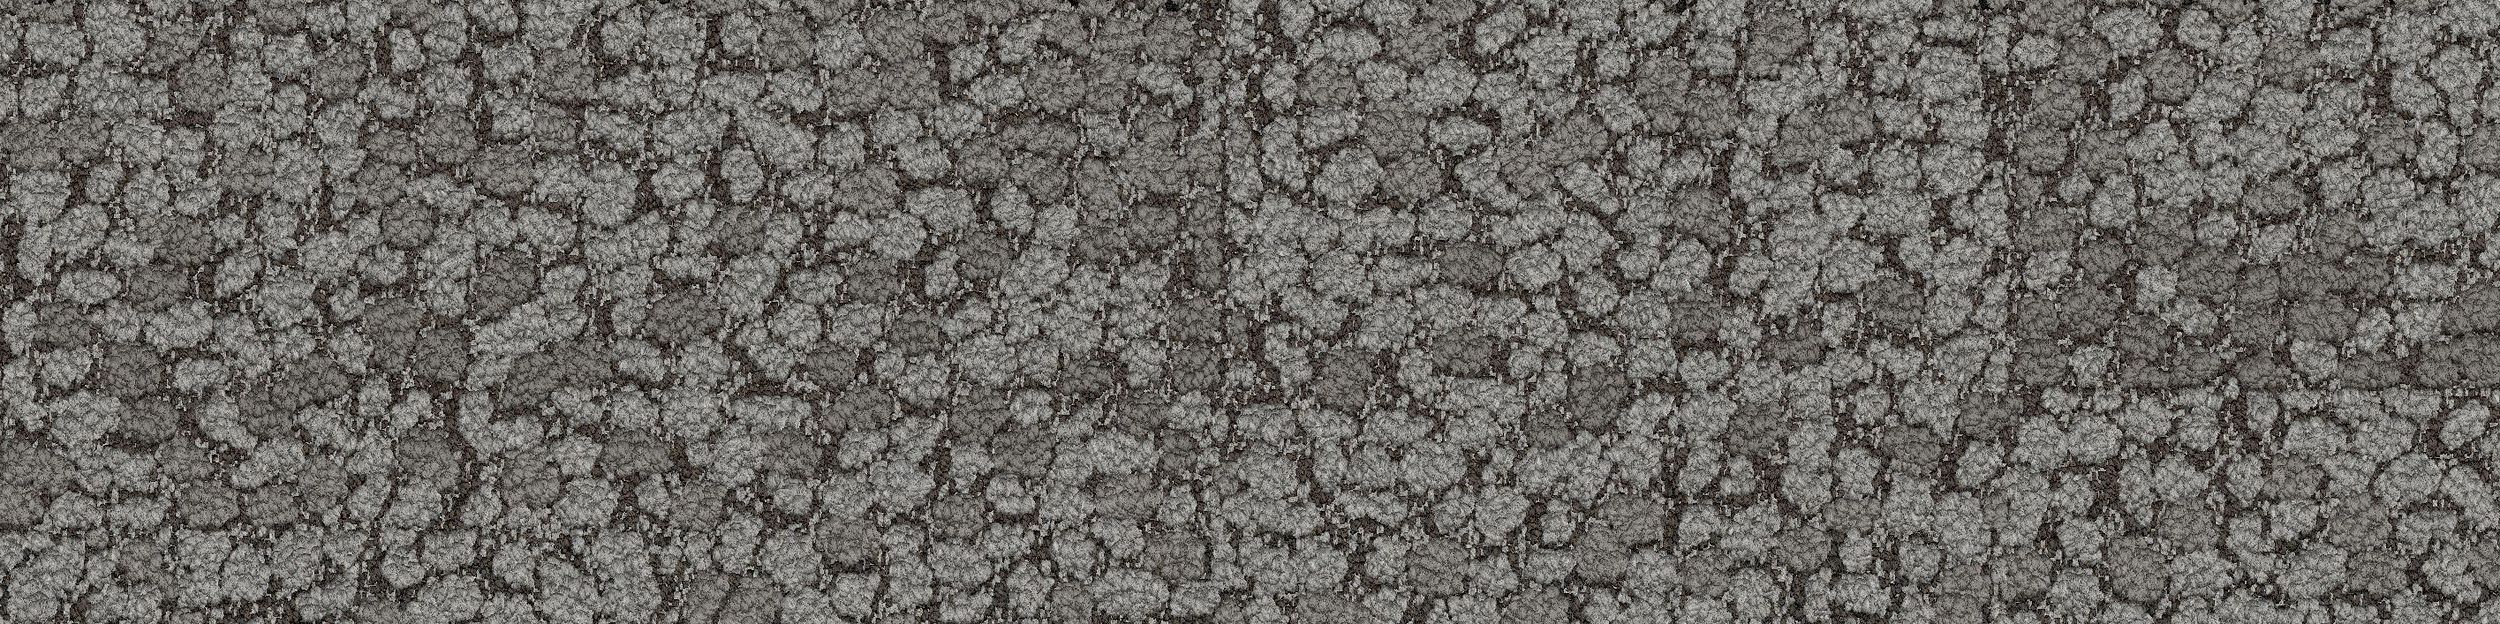 HN840 Carpet Tile In Nickel número de imagen 2